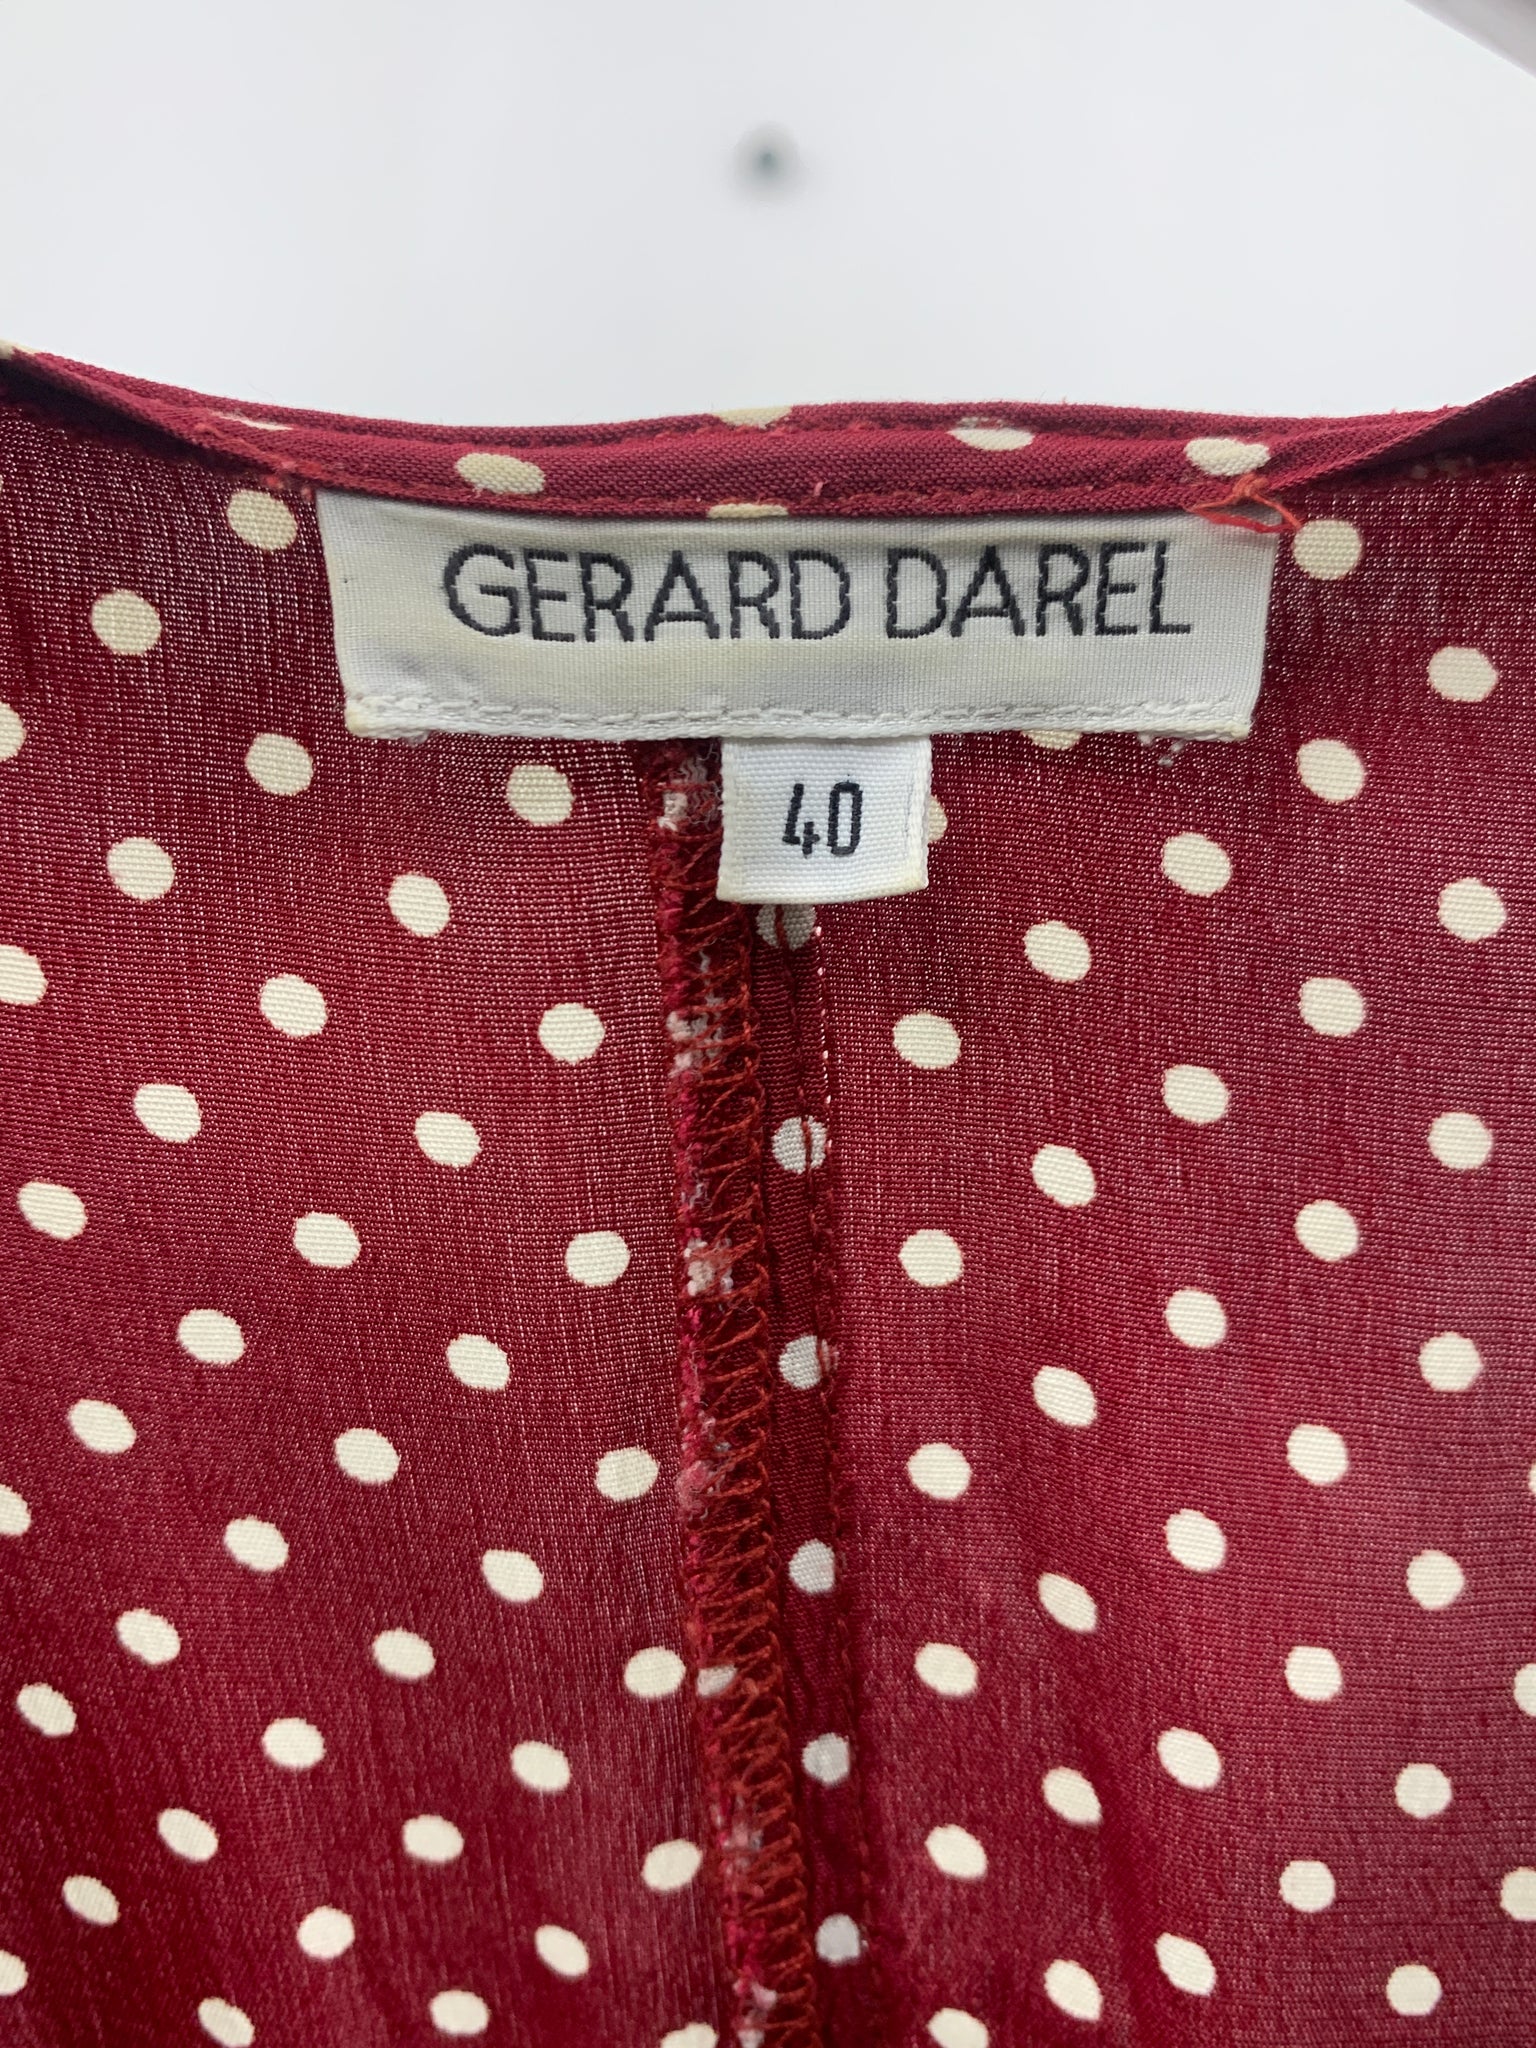 Gerard darel  kjole